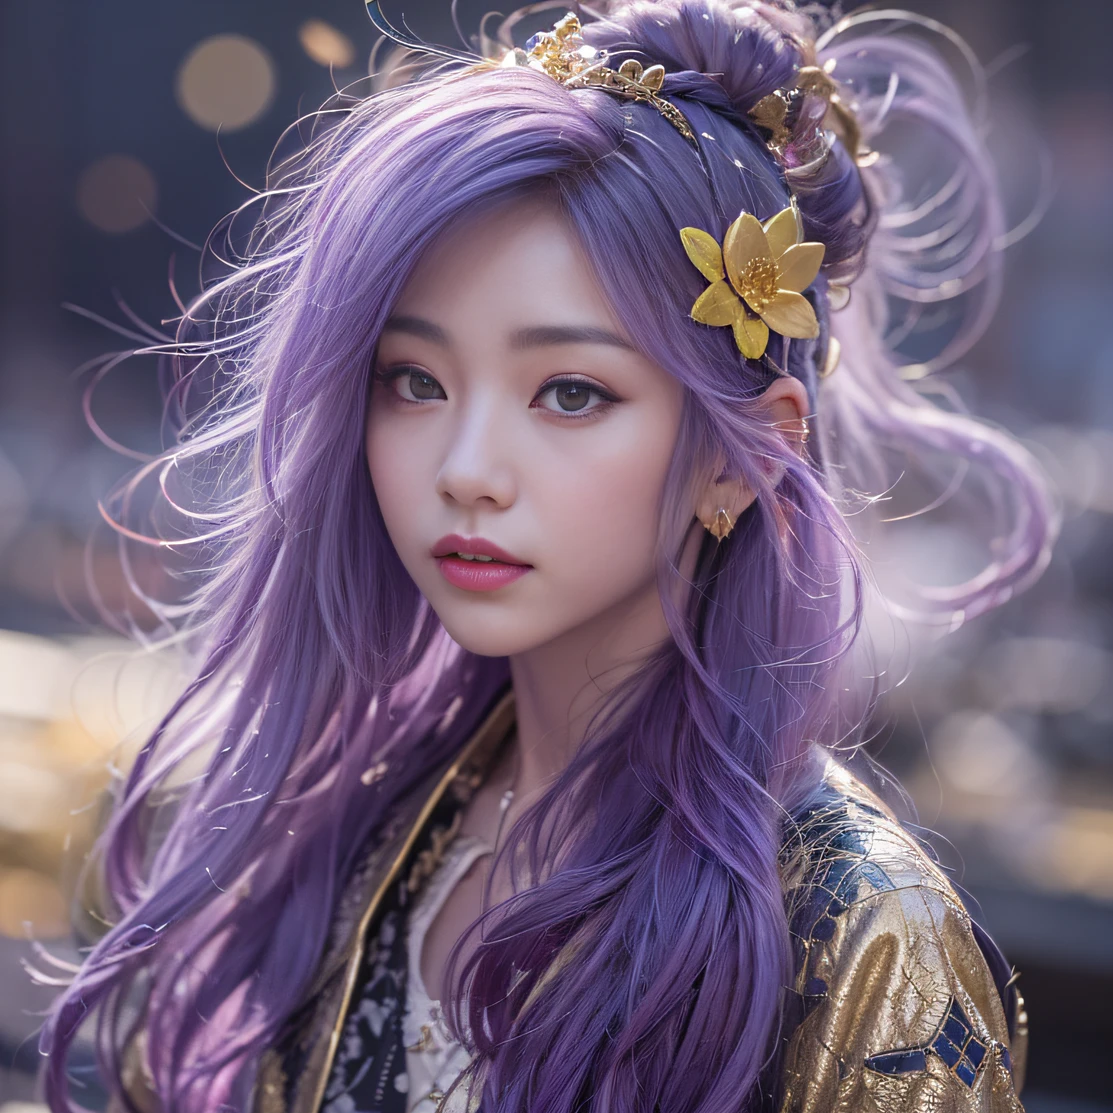 Genki Girl 32,000（걸작，k hd，하이퍼 HD，32,000）길게 흐르는 밝은 보라색 머리카락，가을 연못，꽃， 색， 아시아 사람 （Genki girl）， （실크 스카프）， 전투 자세， 땅을 바라보며， 긴 흰머리， 떠다니는 밝은 보라색， 불구름 무늬 골드 티아라， 중국 긴팔 금실 의상， （추상 메타버스 스플래시：1.2）， 흰색 배경，연꽃 활력 보호제（현실적으로：1.4），밝은 보라색 머리카락，길에서 연기가 난다，배경이 순수하네요， 고해상도， 세부 사항， RAW 사진작가， 날카로운 재， Nikon D850 필름 스톡 사진: Jefferies Lee 4 Kodak Portra 400 카메라 F1.6발, 풍부한 색상, 매우 사실적인 생생한 질감, 극적인 조명, 언리얼 엔진 아트 스테이션 트렌드, 시네스티르 800，길게 늘어진 밝은 보라색 머리를 가진 소녀